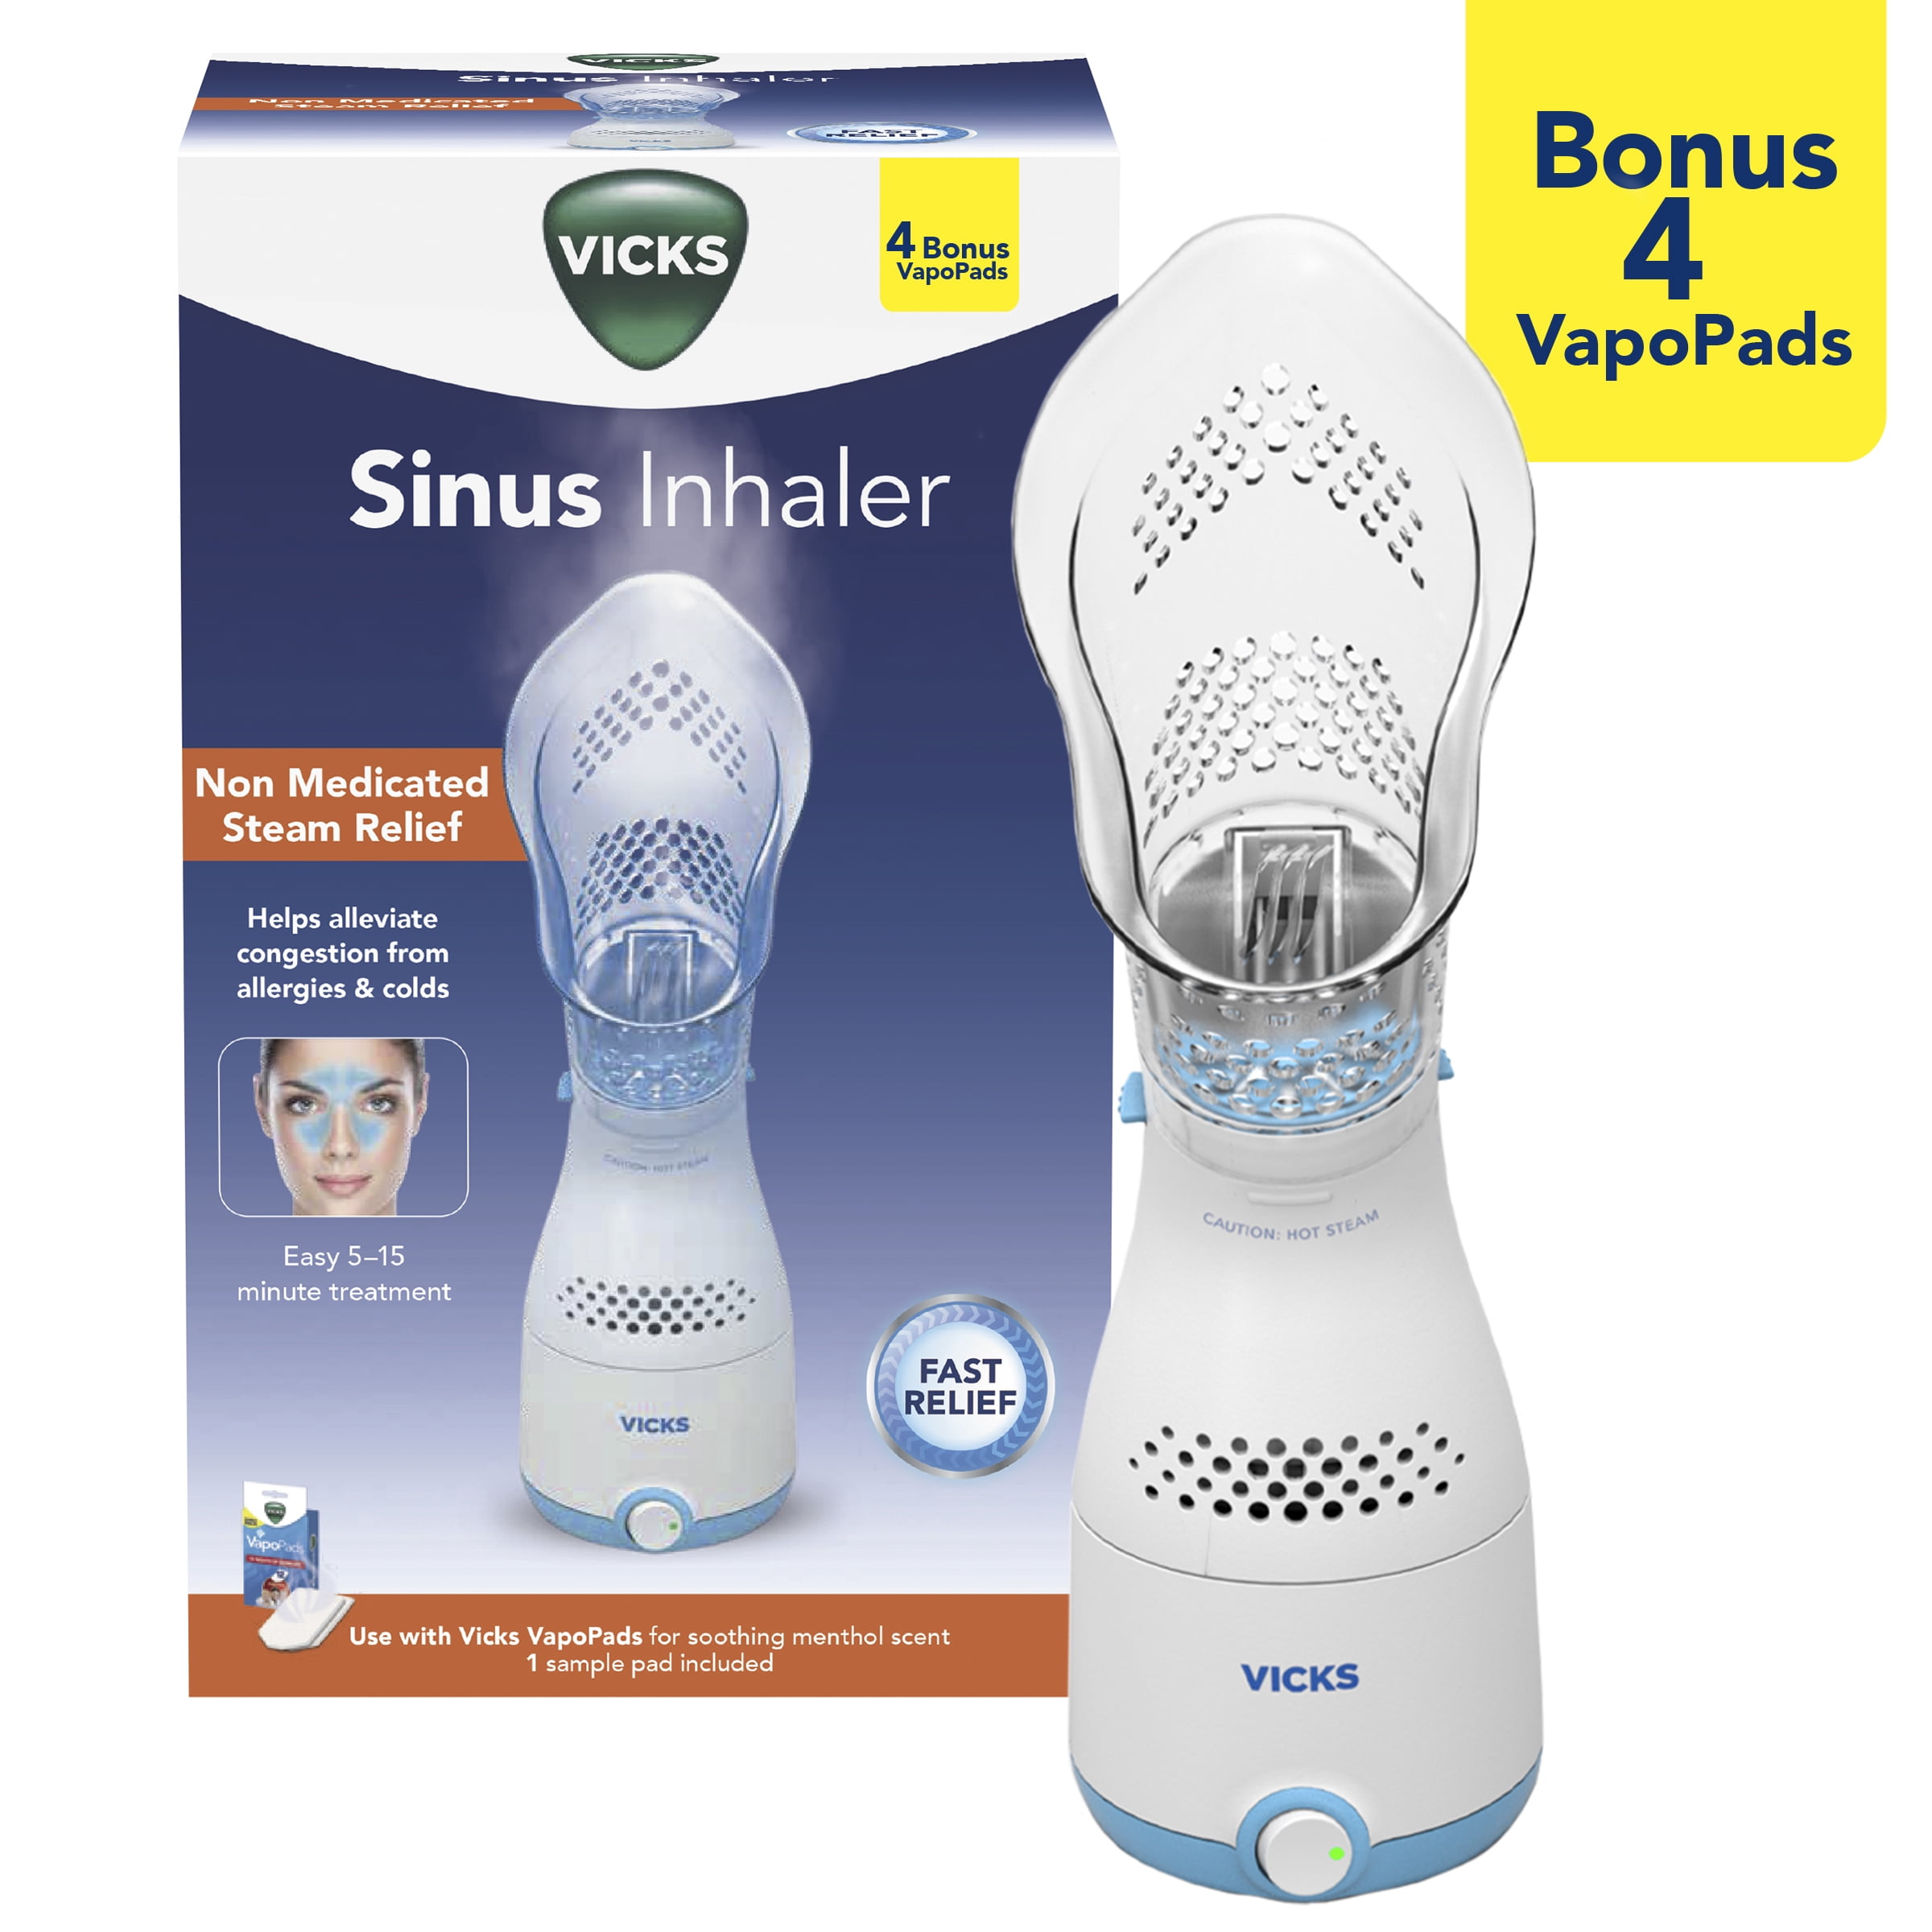 Vicks Non Medicated Steam Sinus Inhaler with 4 Bonus VapoPads, for